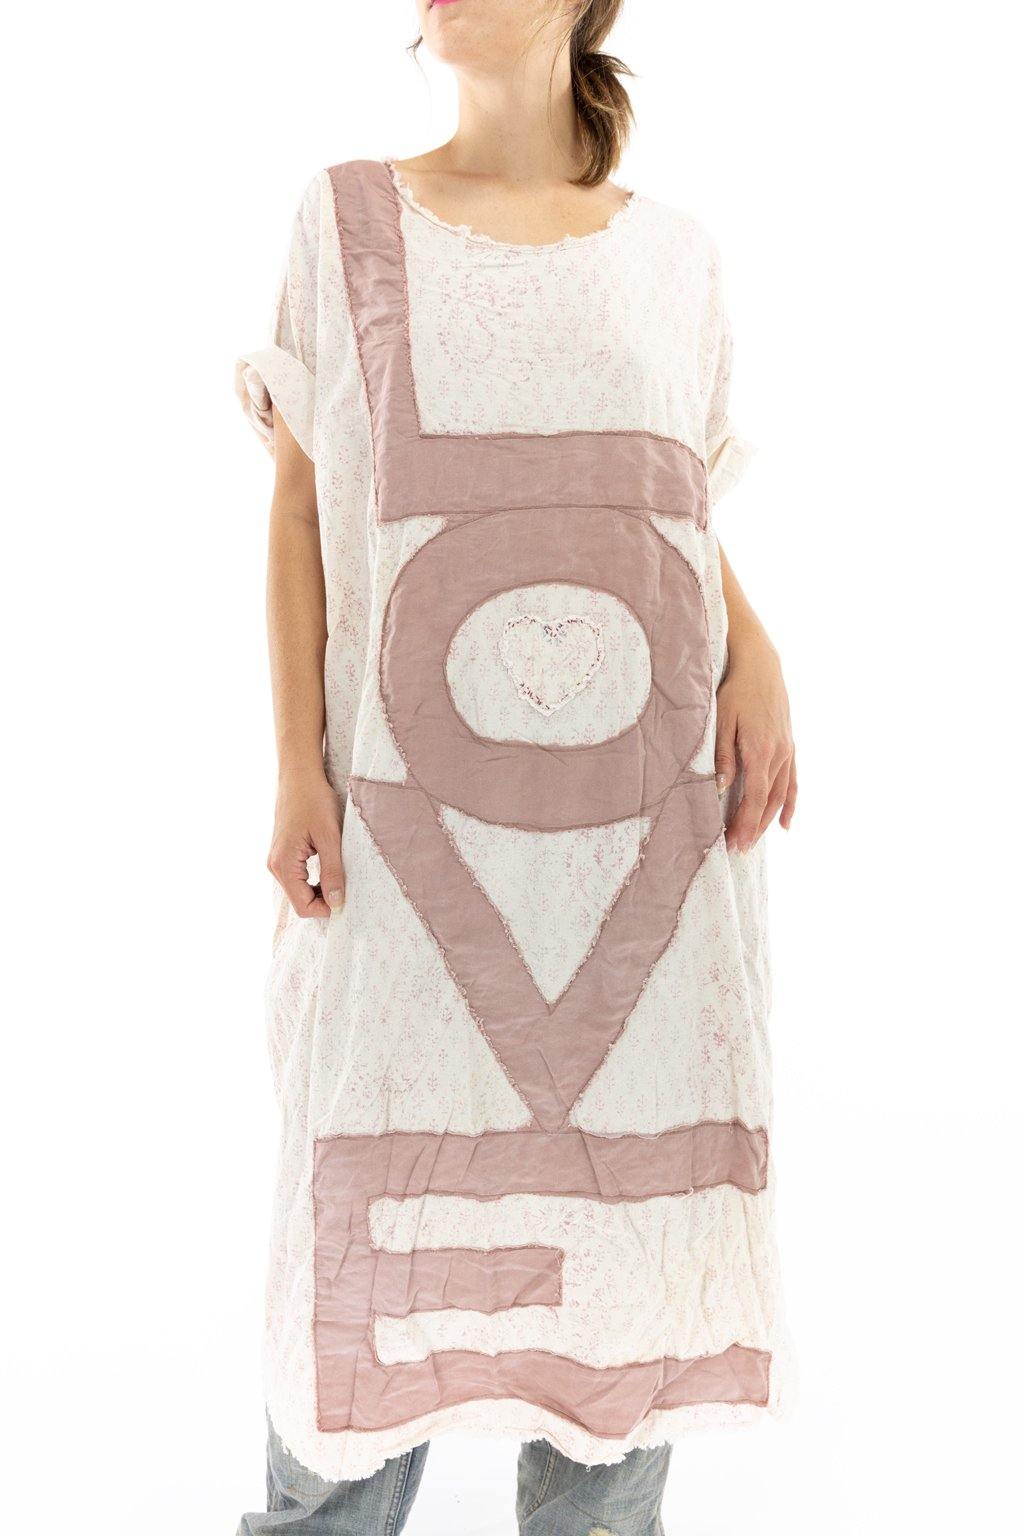 Evolve Artist Smock Dress - Magnolia Pearl Clothing